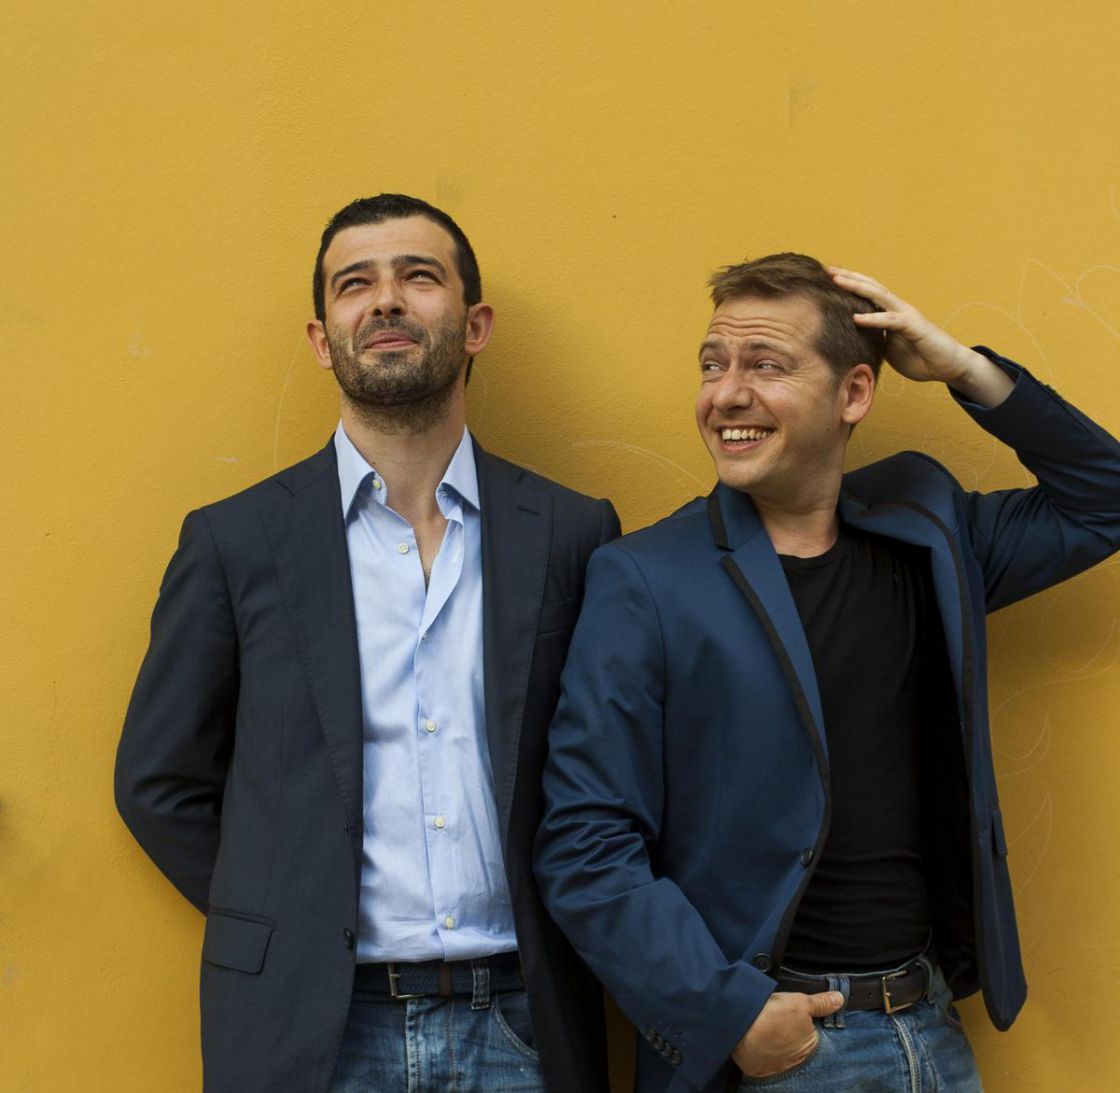  Claudio Borgianni i Vincenzo Capezzuto - założyciele Soqquadro Italiano